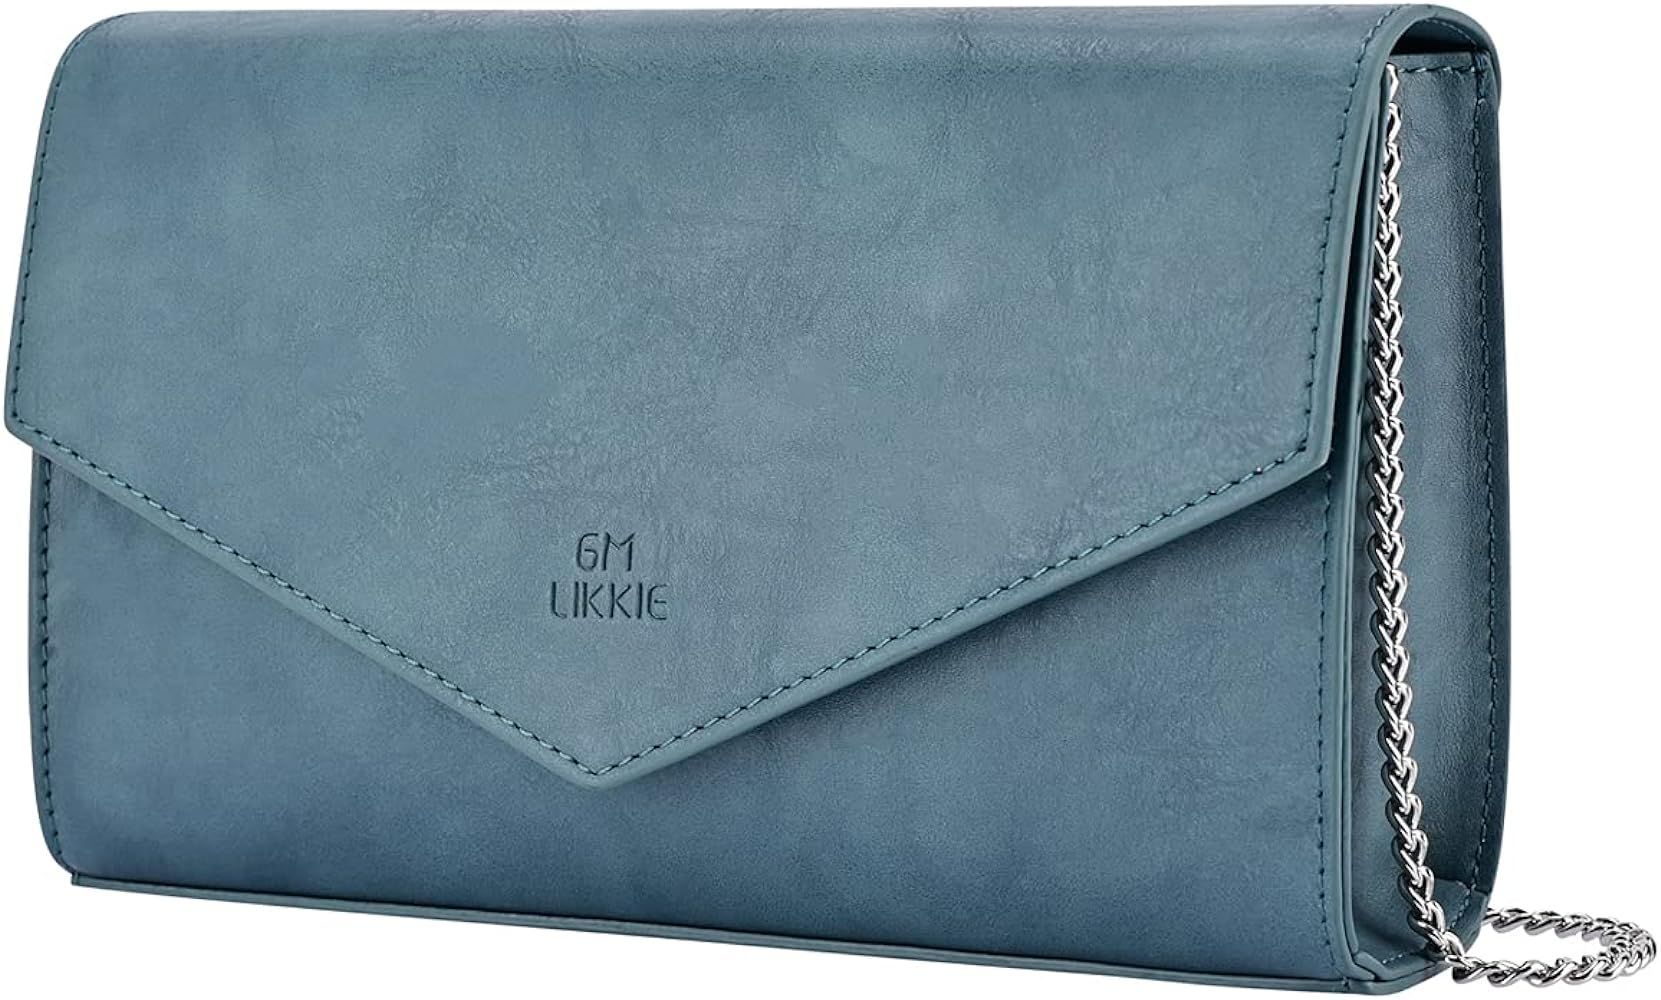 GM LIKKIE Clutch Purse for Women, Evening Envelope Clutch Bag, Crossbody Foldover PU Leather Shou... | Amazon (US)